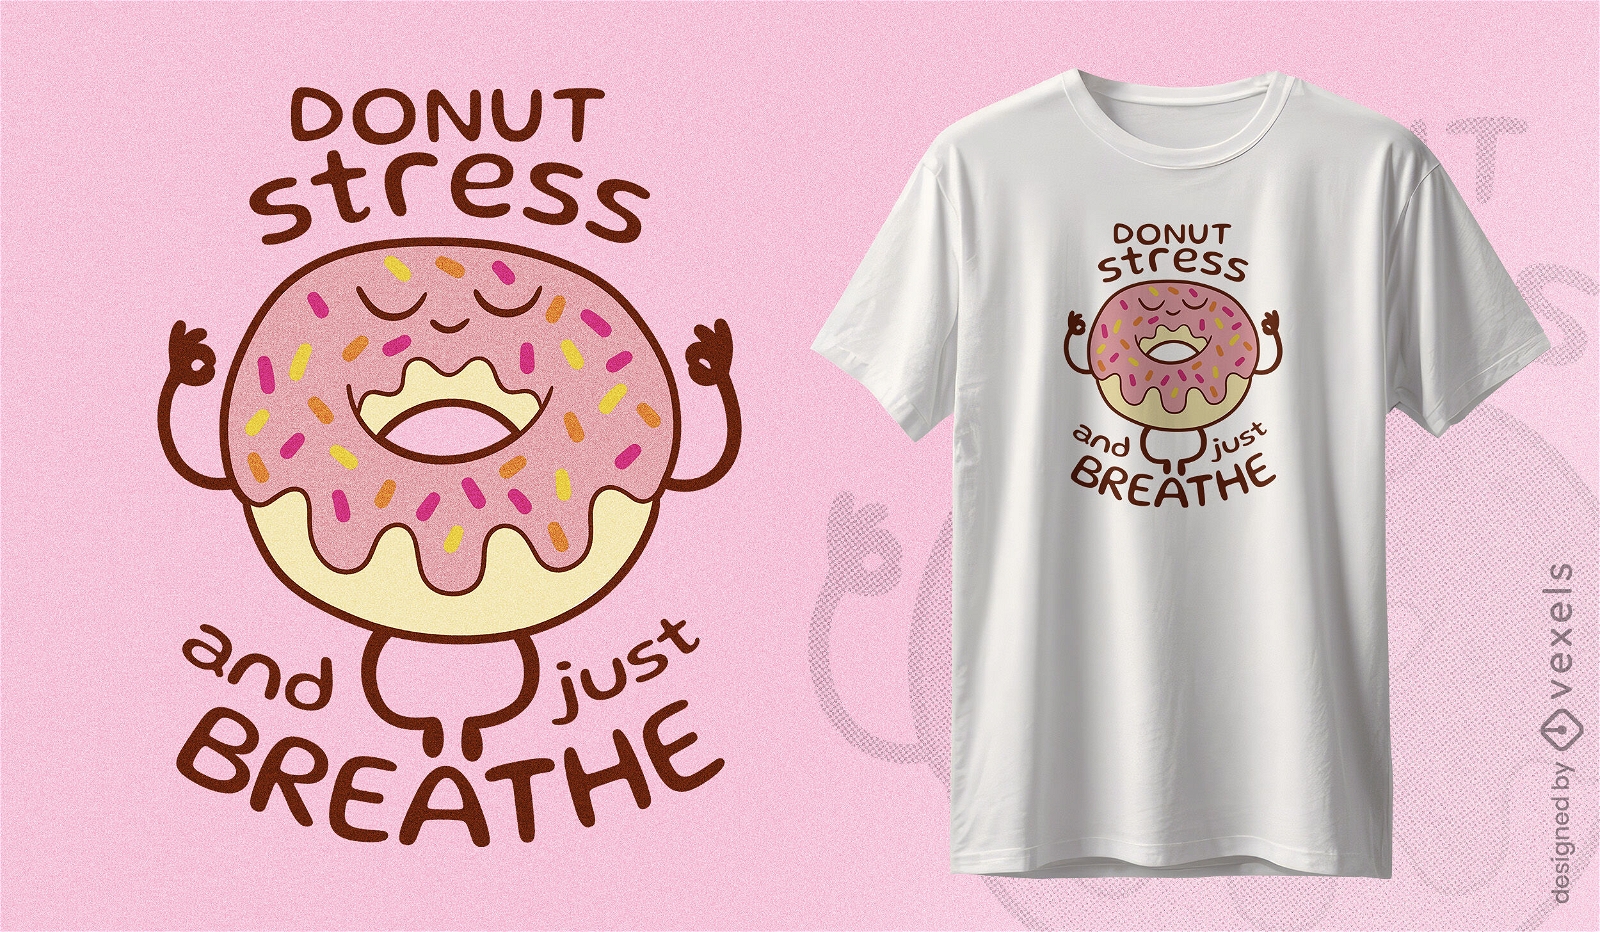 Yoga donut stress-relief t-shirt design